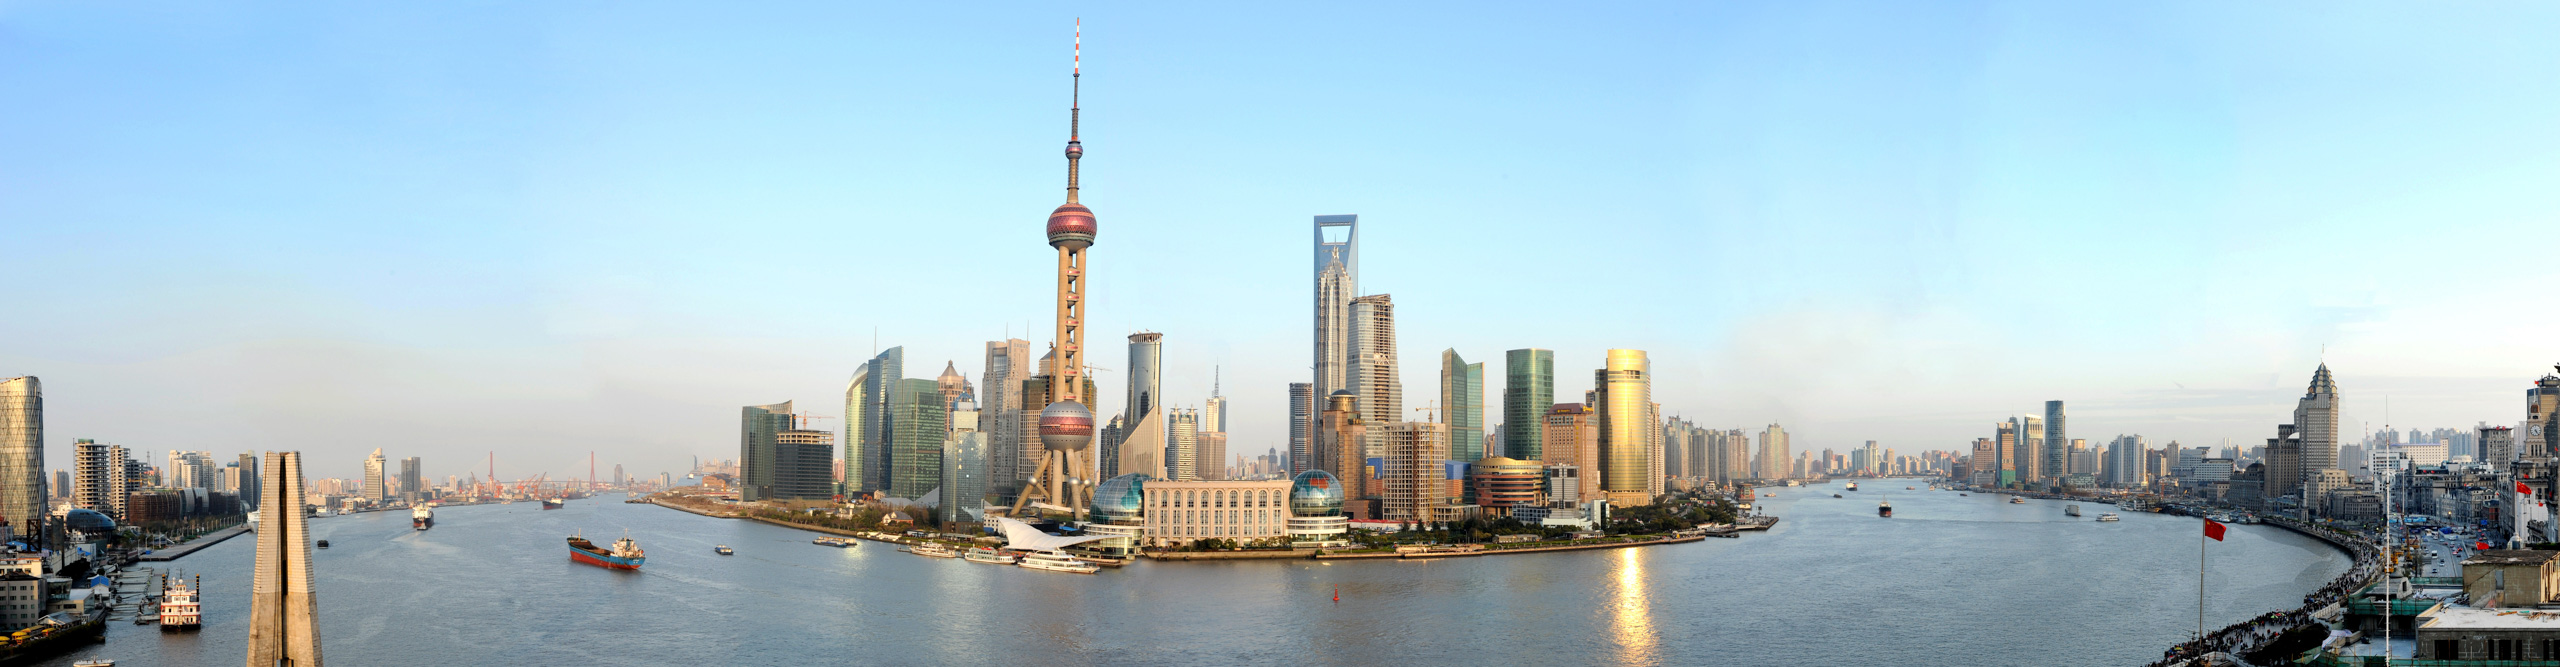 Day time skyline of Shanghai 